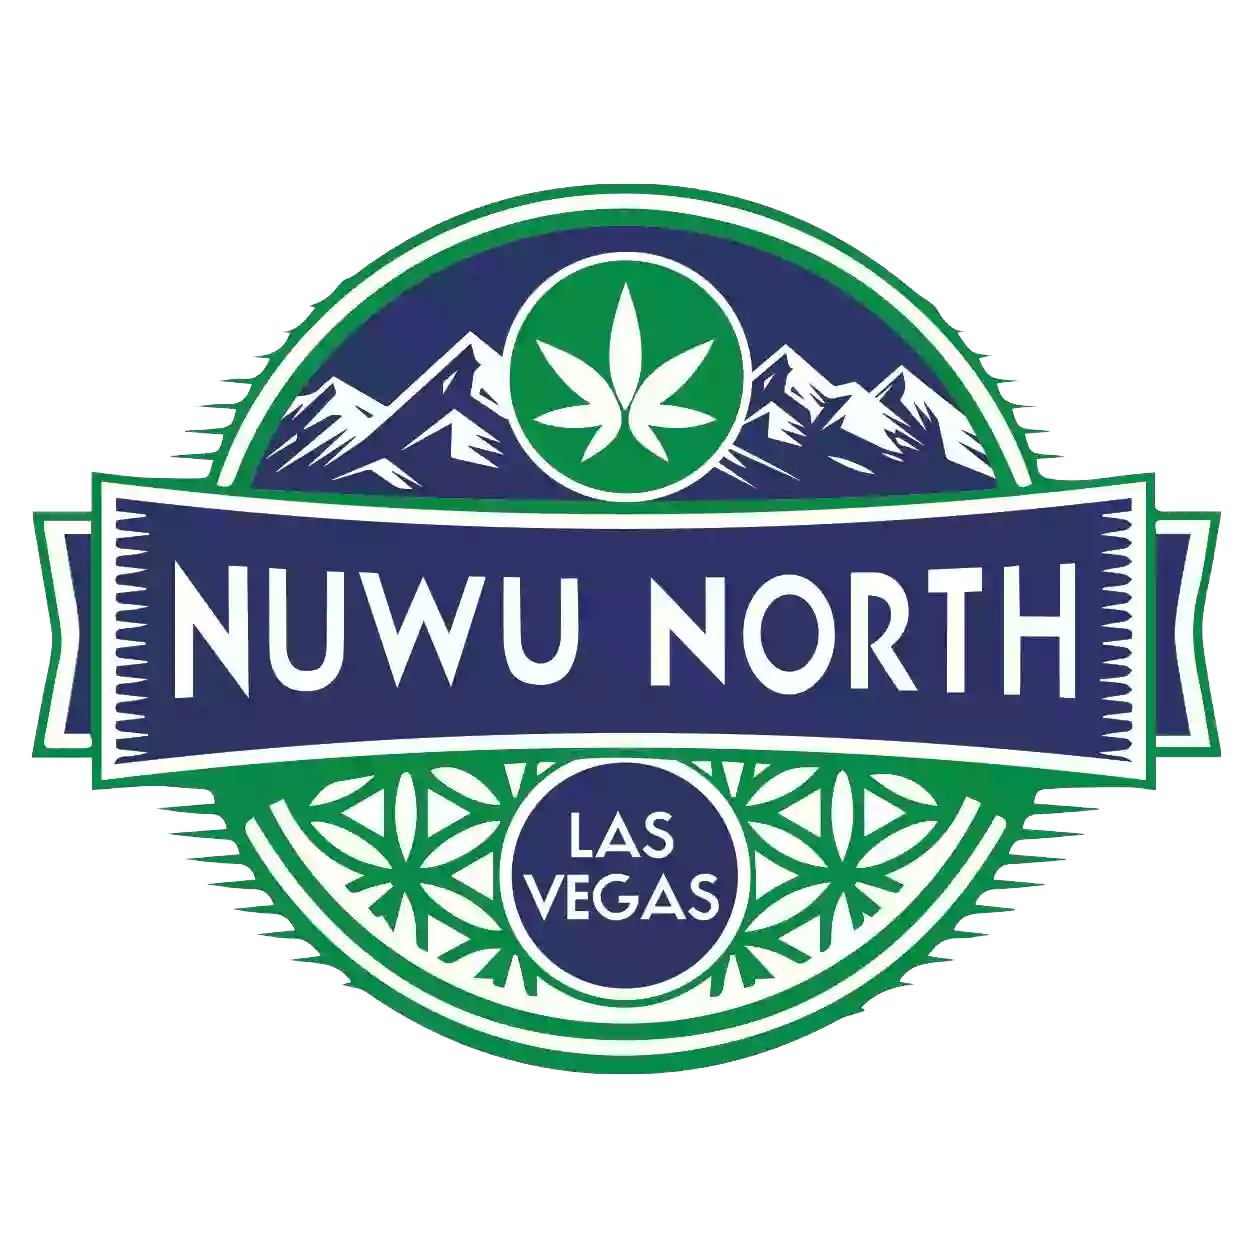 NuWu North